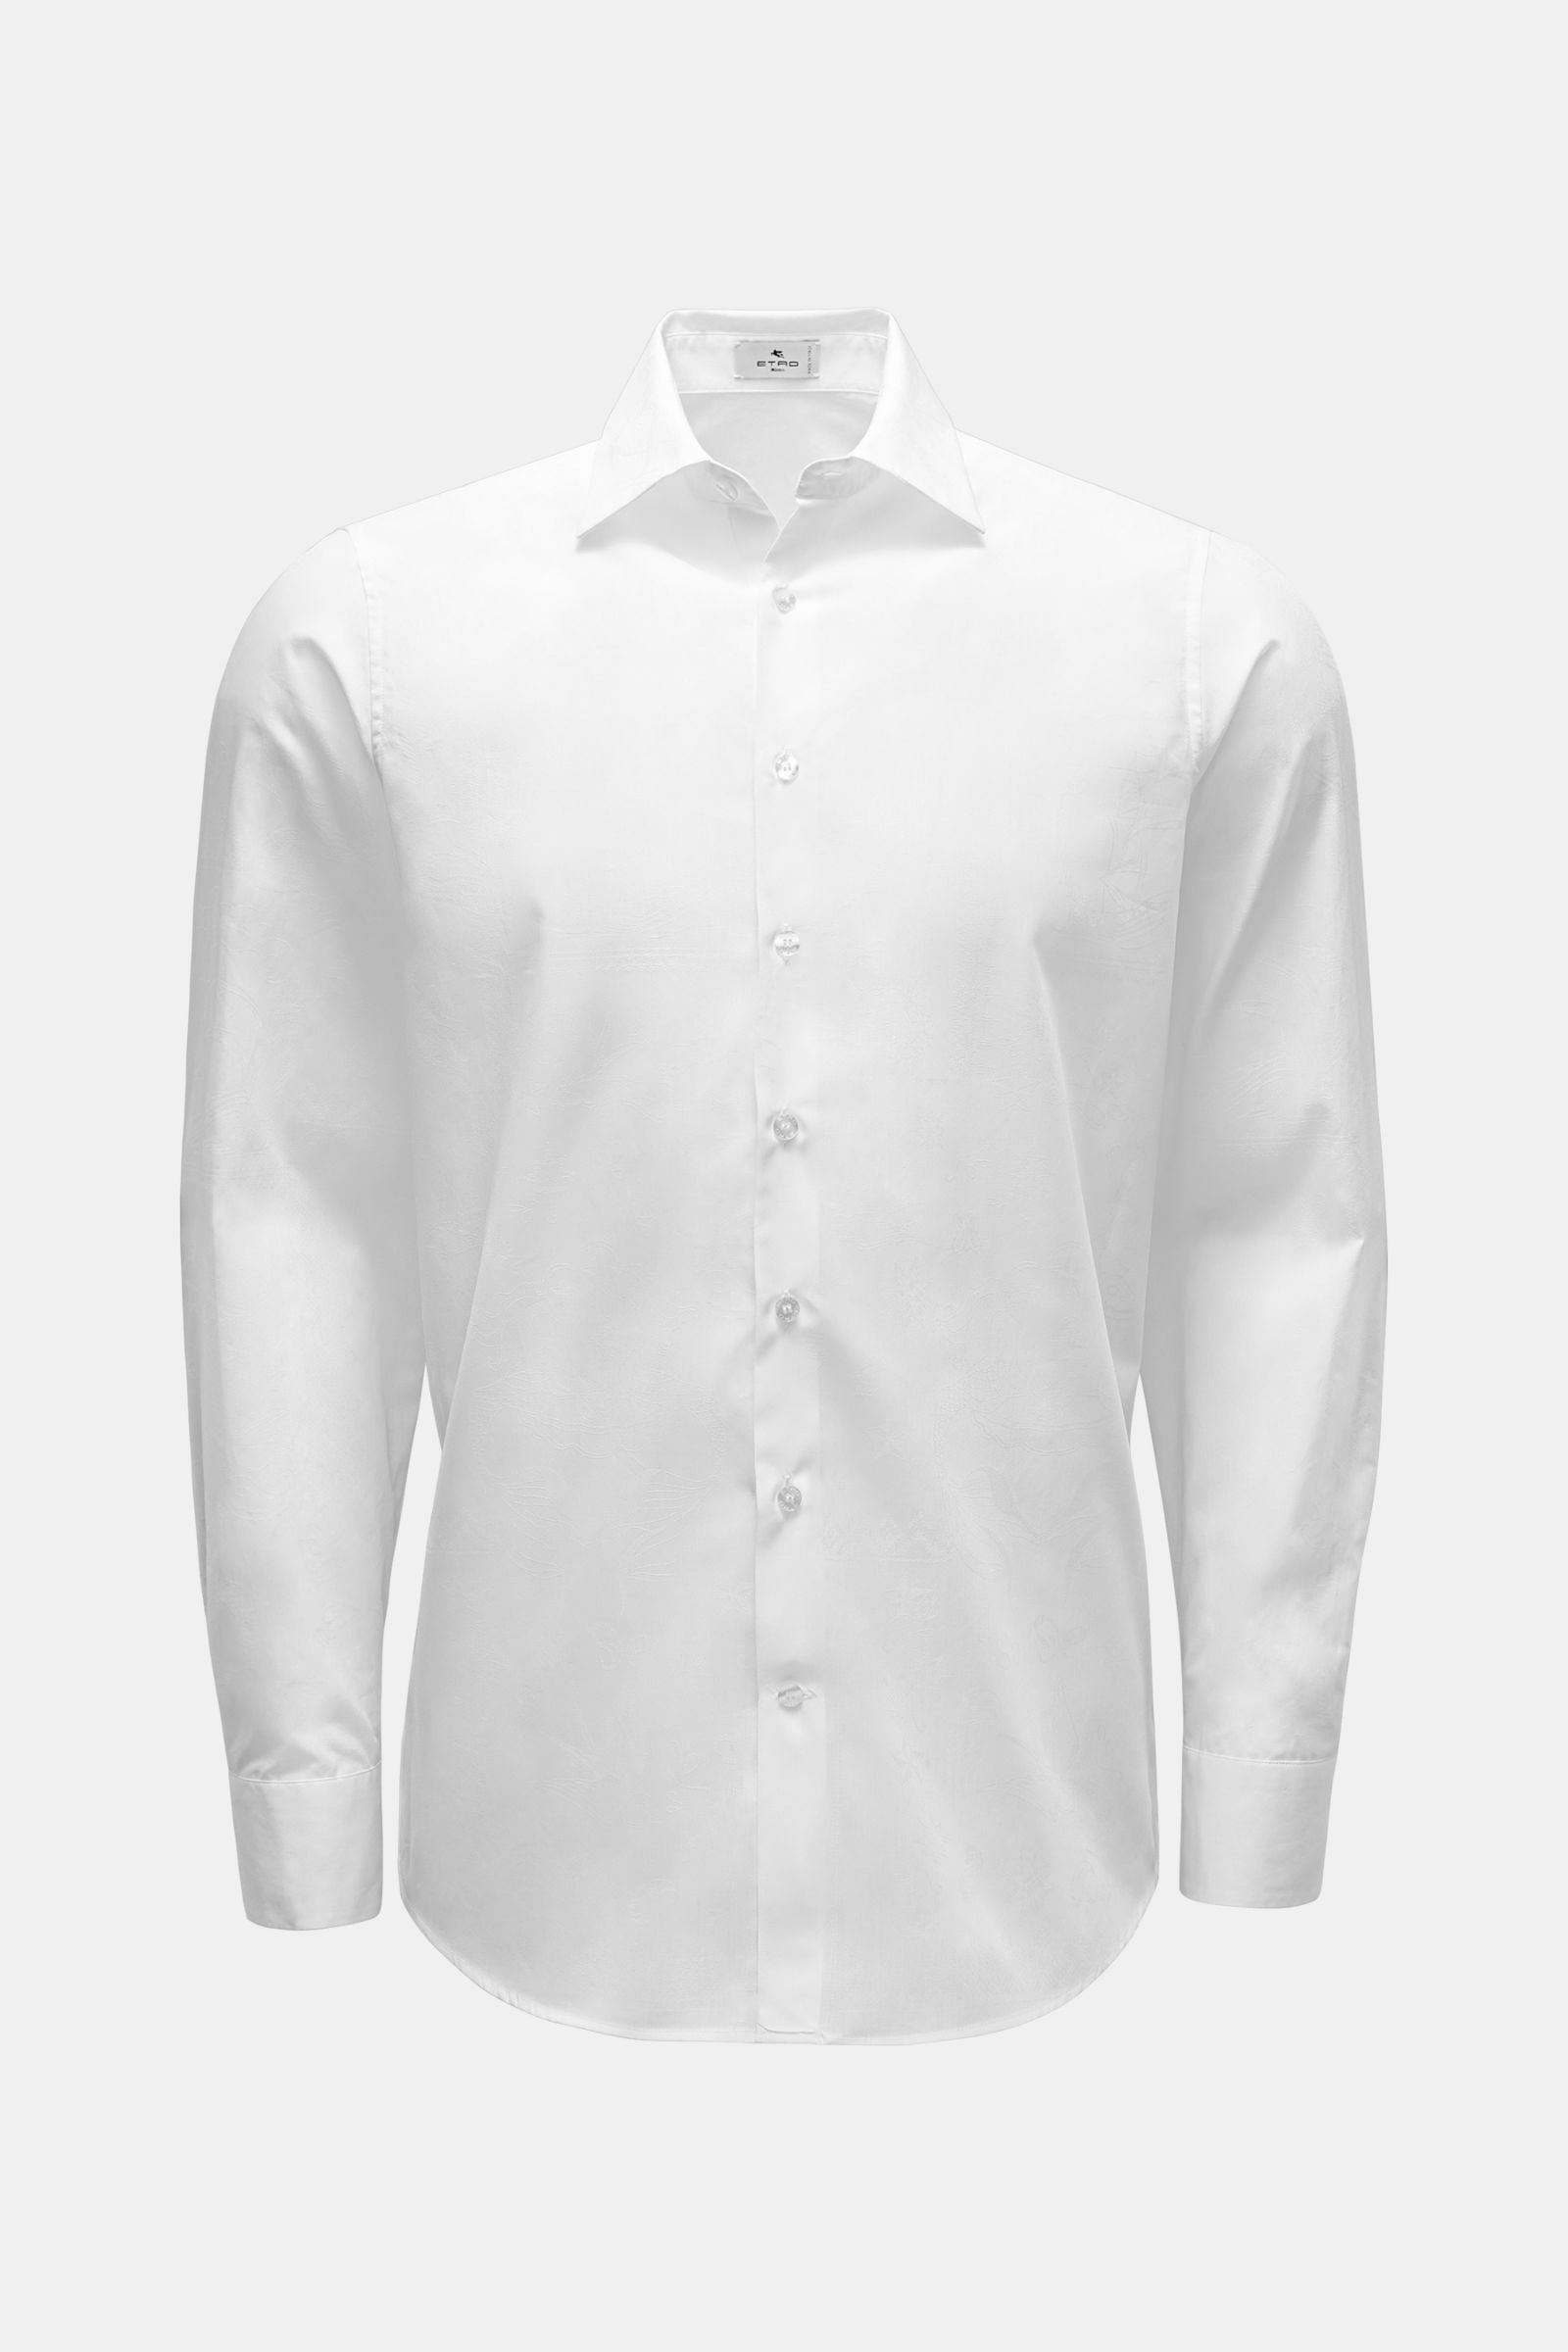 Jacquard shirt white